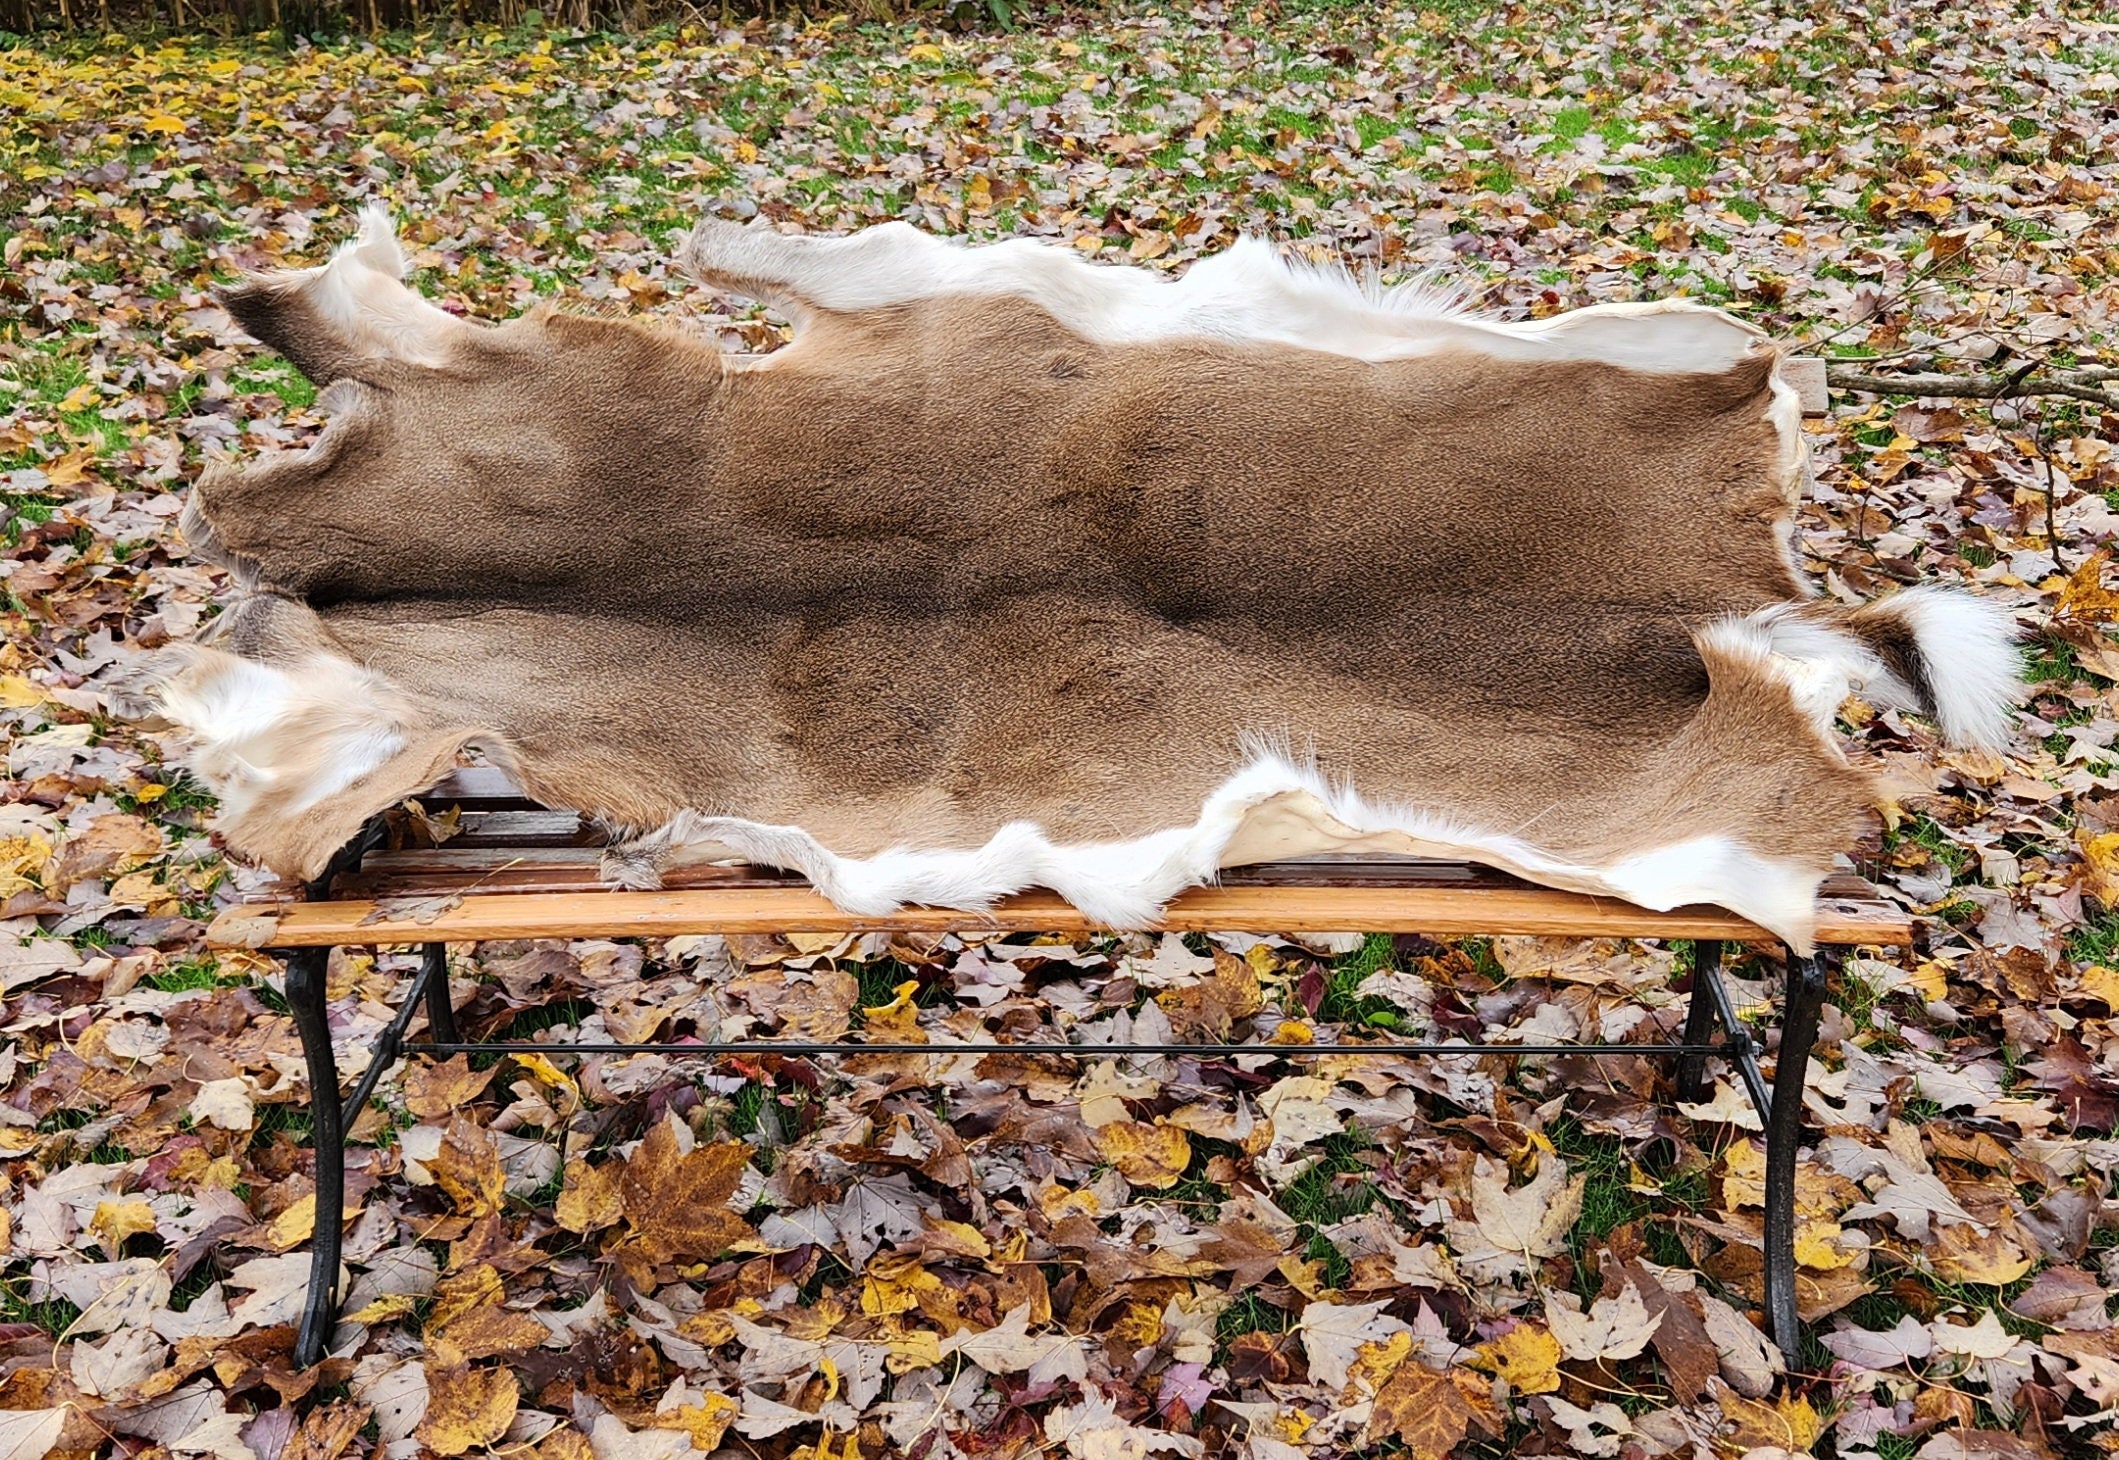 Whitetail Deer Taxidermy Tanned Fur on Hide White Buckskin - Moose